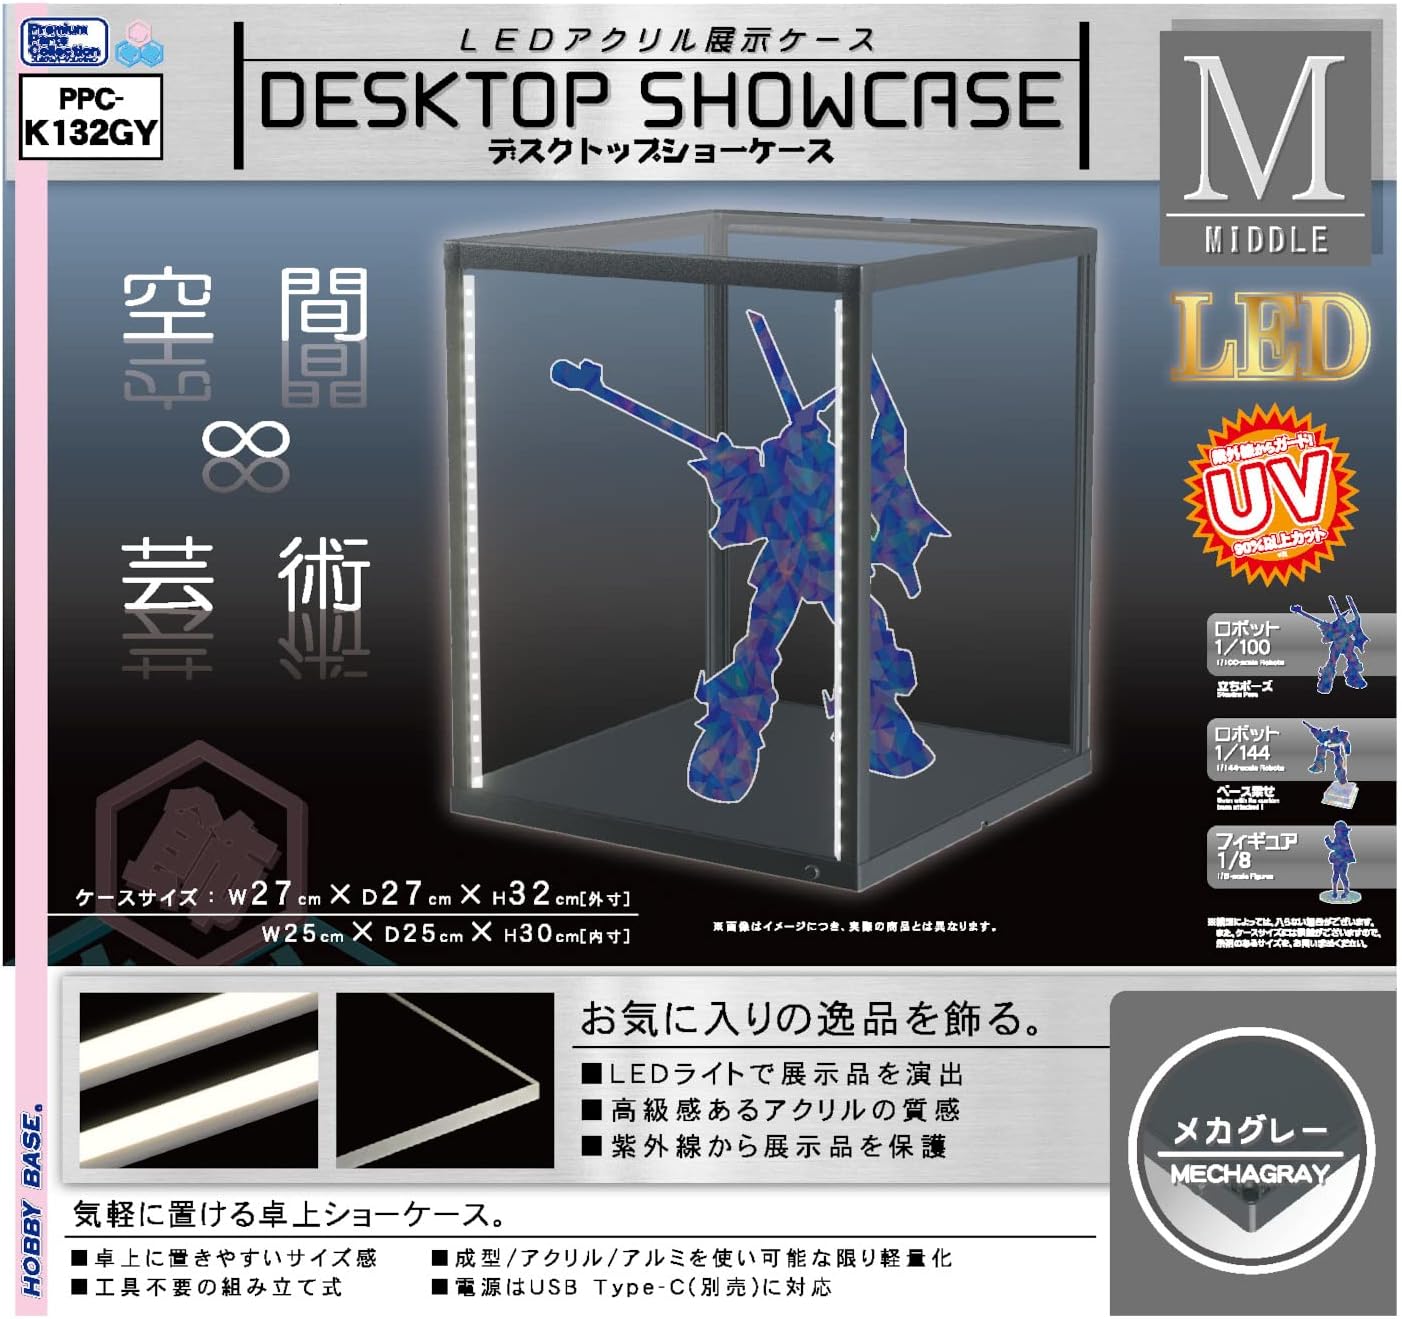 Hobby Base K132GY Desktop Showcase, M, Mecha Gray Premium Parts Collection - BanzaiHobby